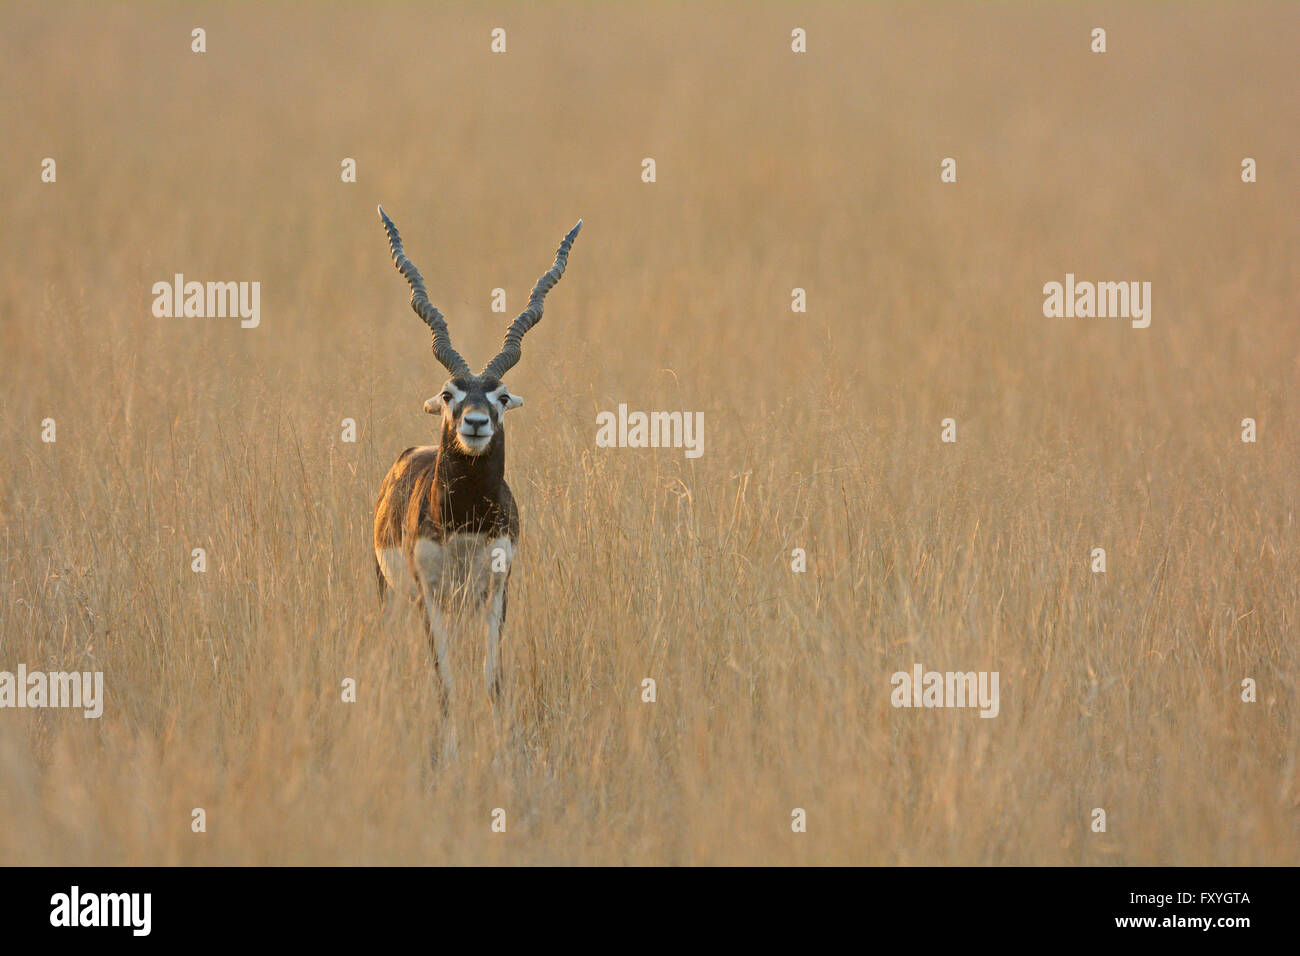 Blackbuck (Antilope cervicapra), male, in the Tal Chhapar grasslands of Rajasthan, India Stock Photo